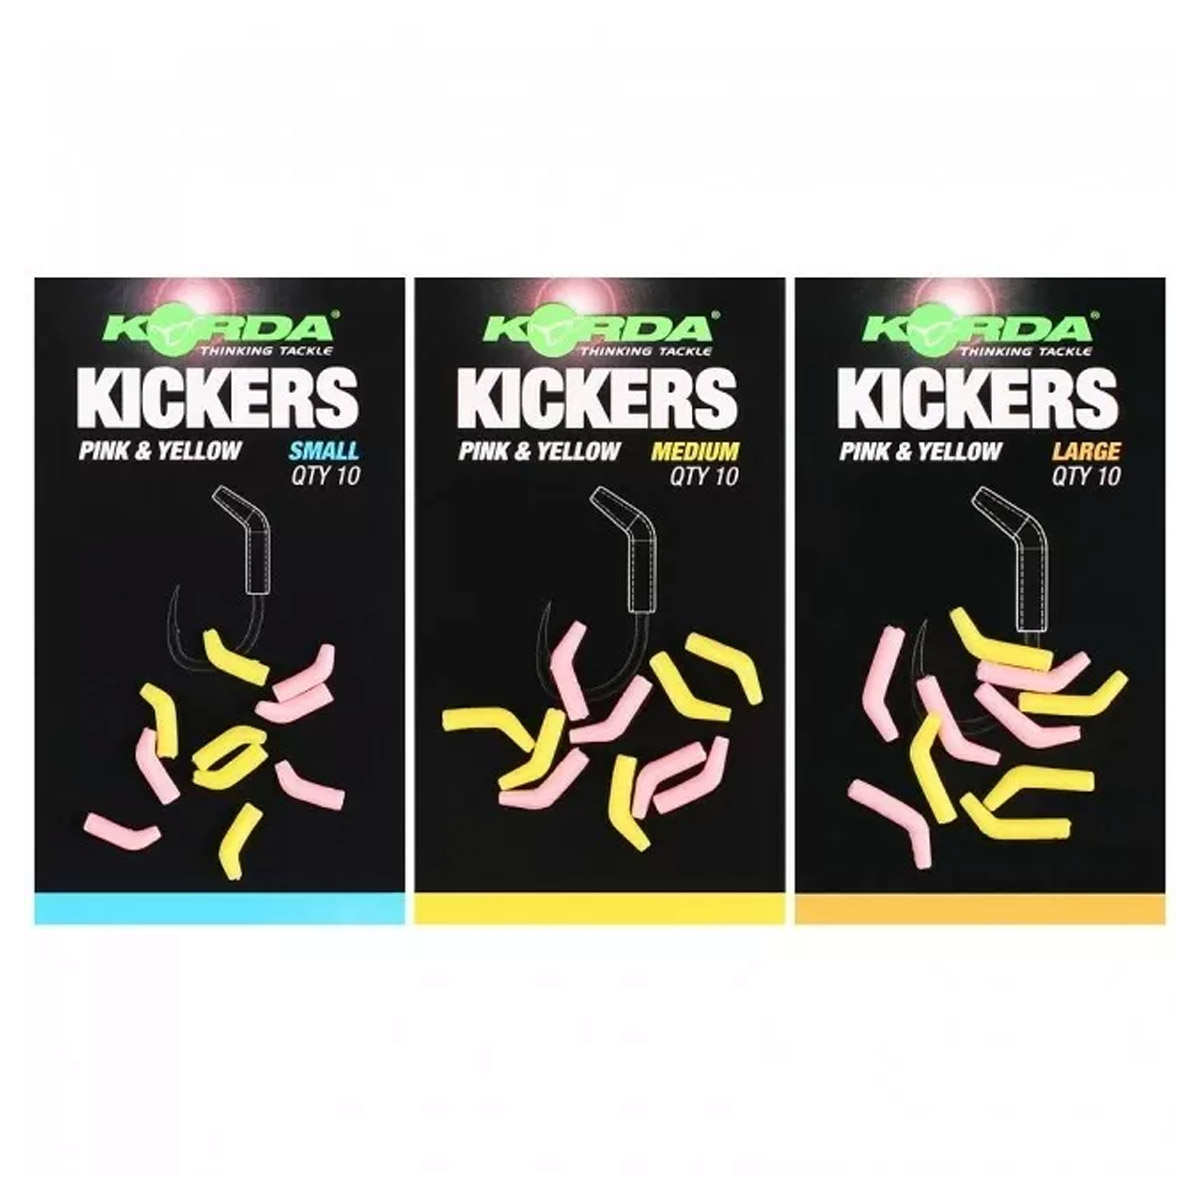 Korda Kickers Yellow Pink